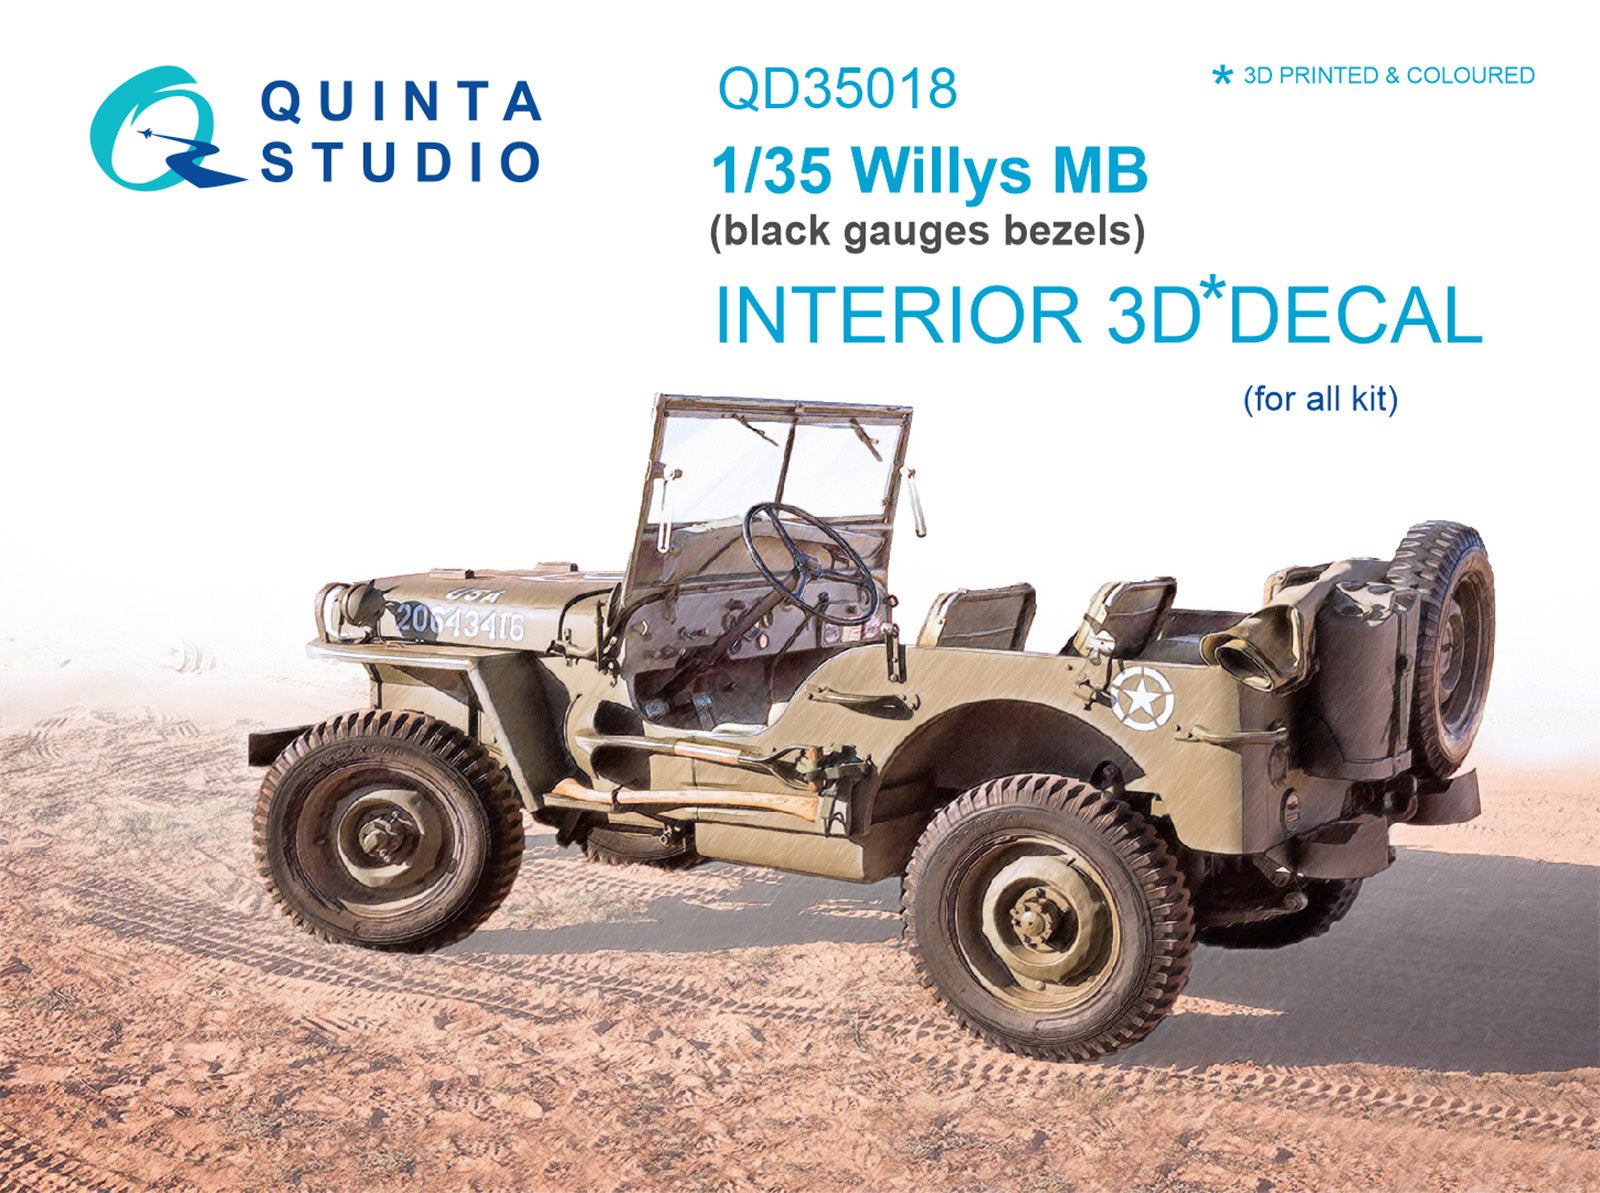 Quinta Studio - 1/35 Willys MB QD35018 for all kits